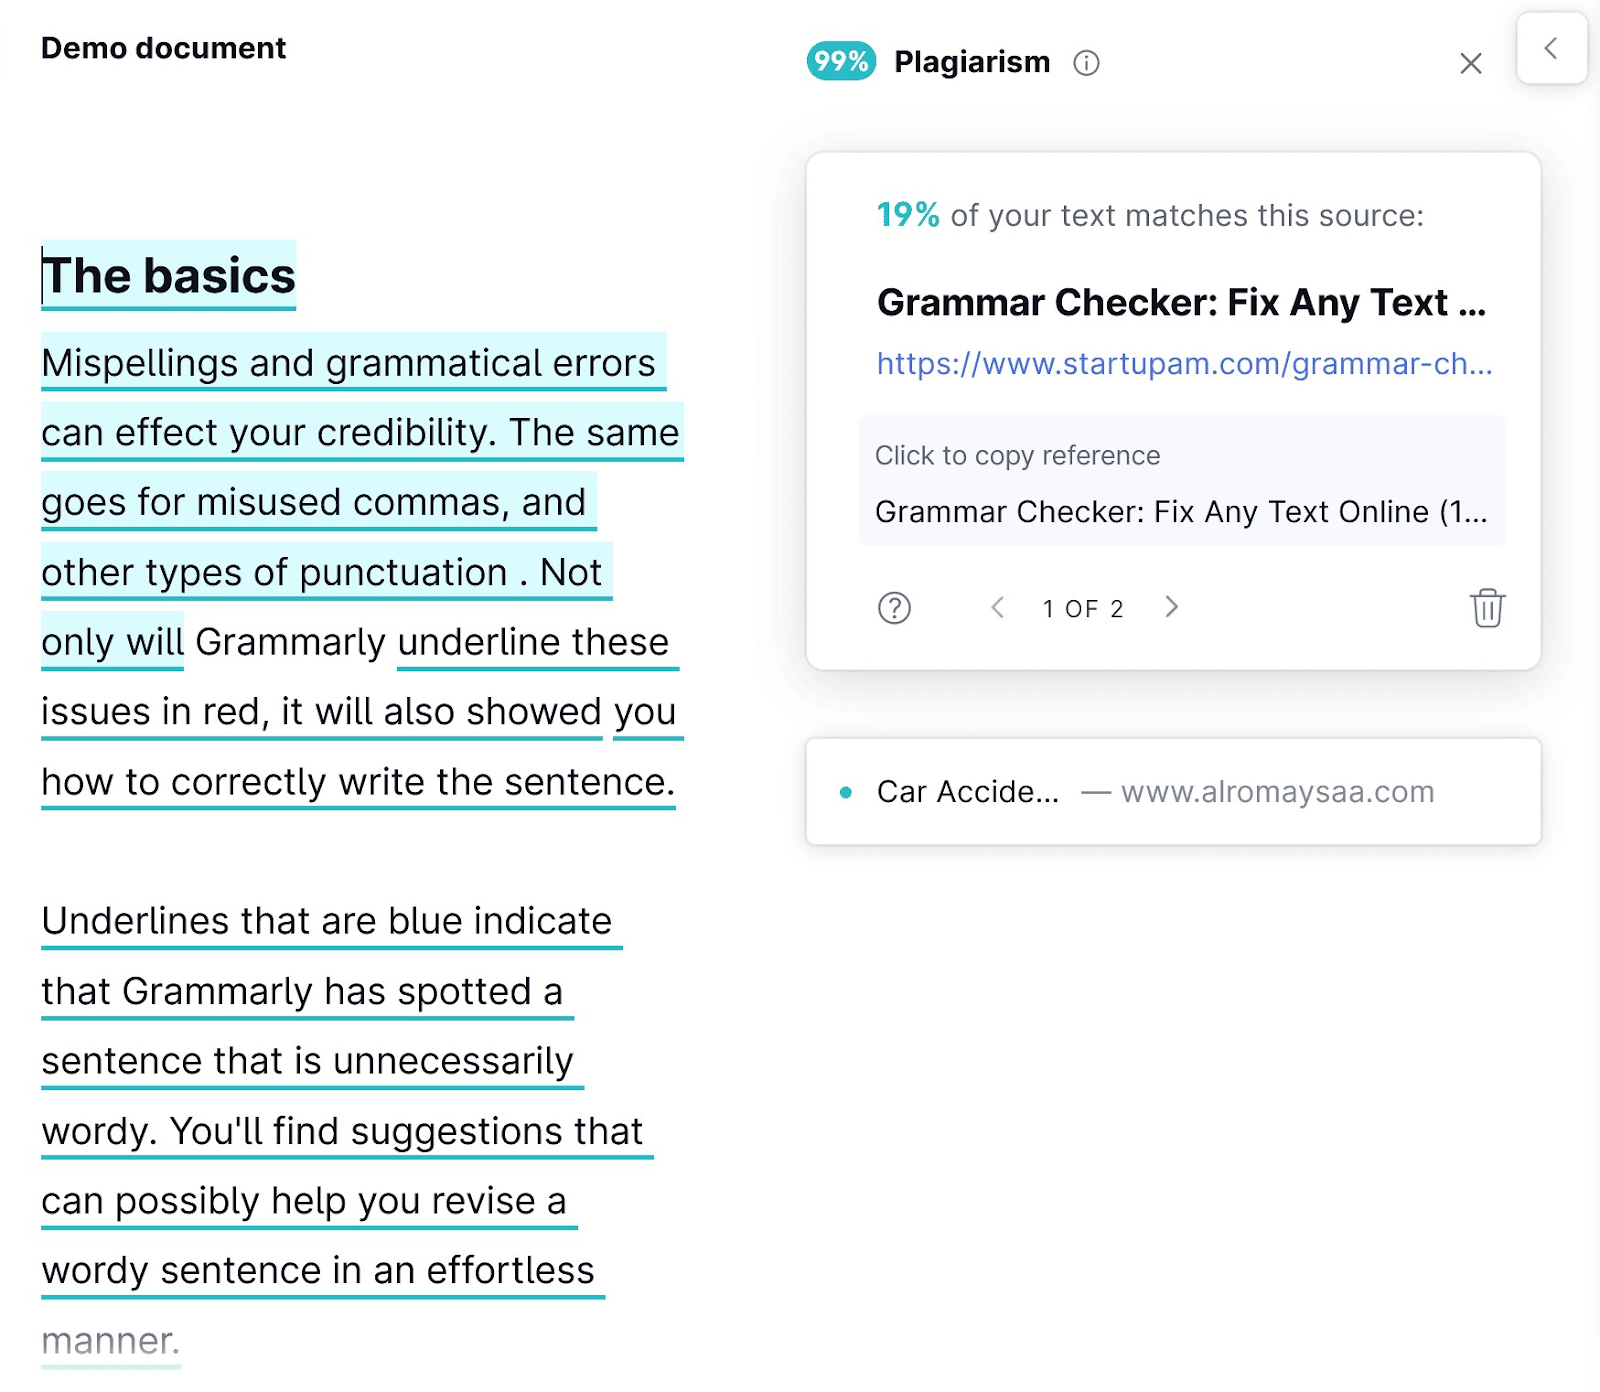 Grammarly’s SEO plagiarism checker